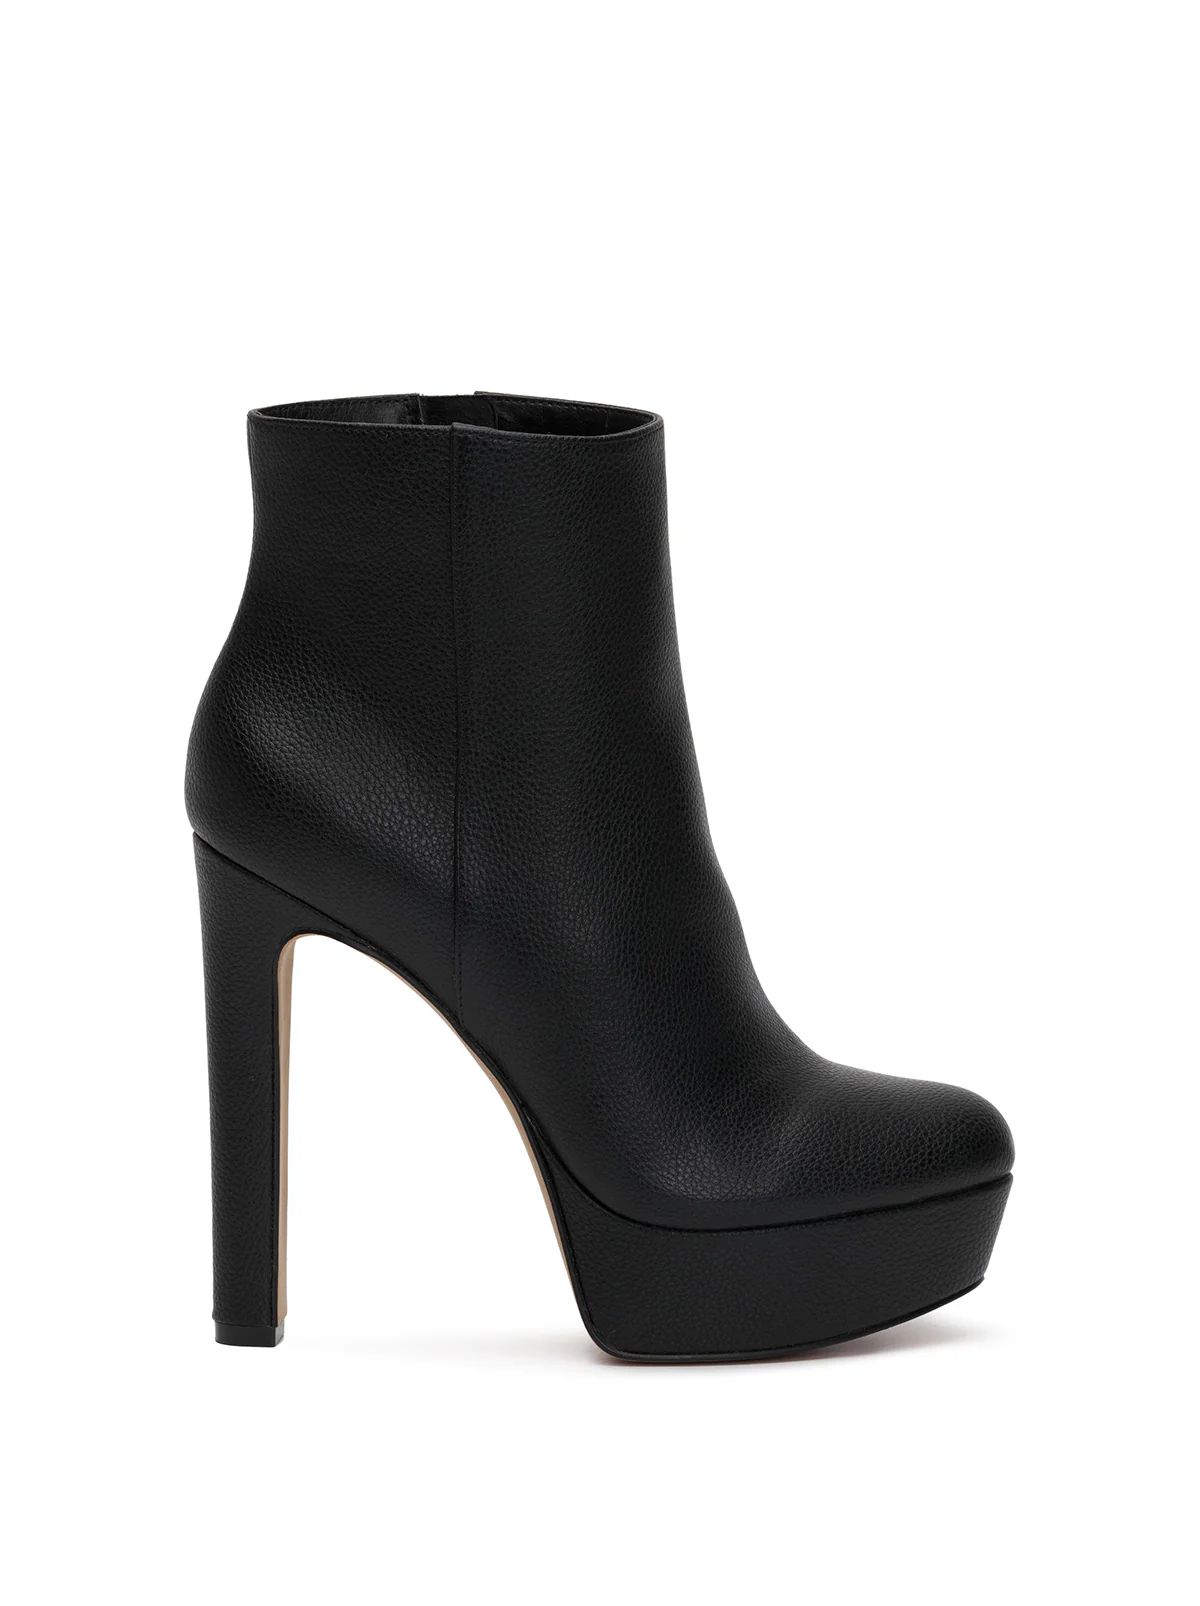 Neriah Boot in Black | Jessica Simpson E Commerce